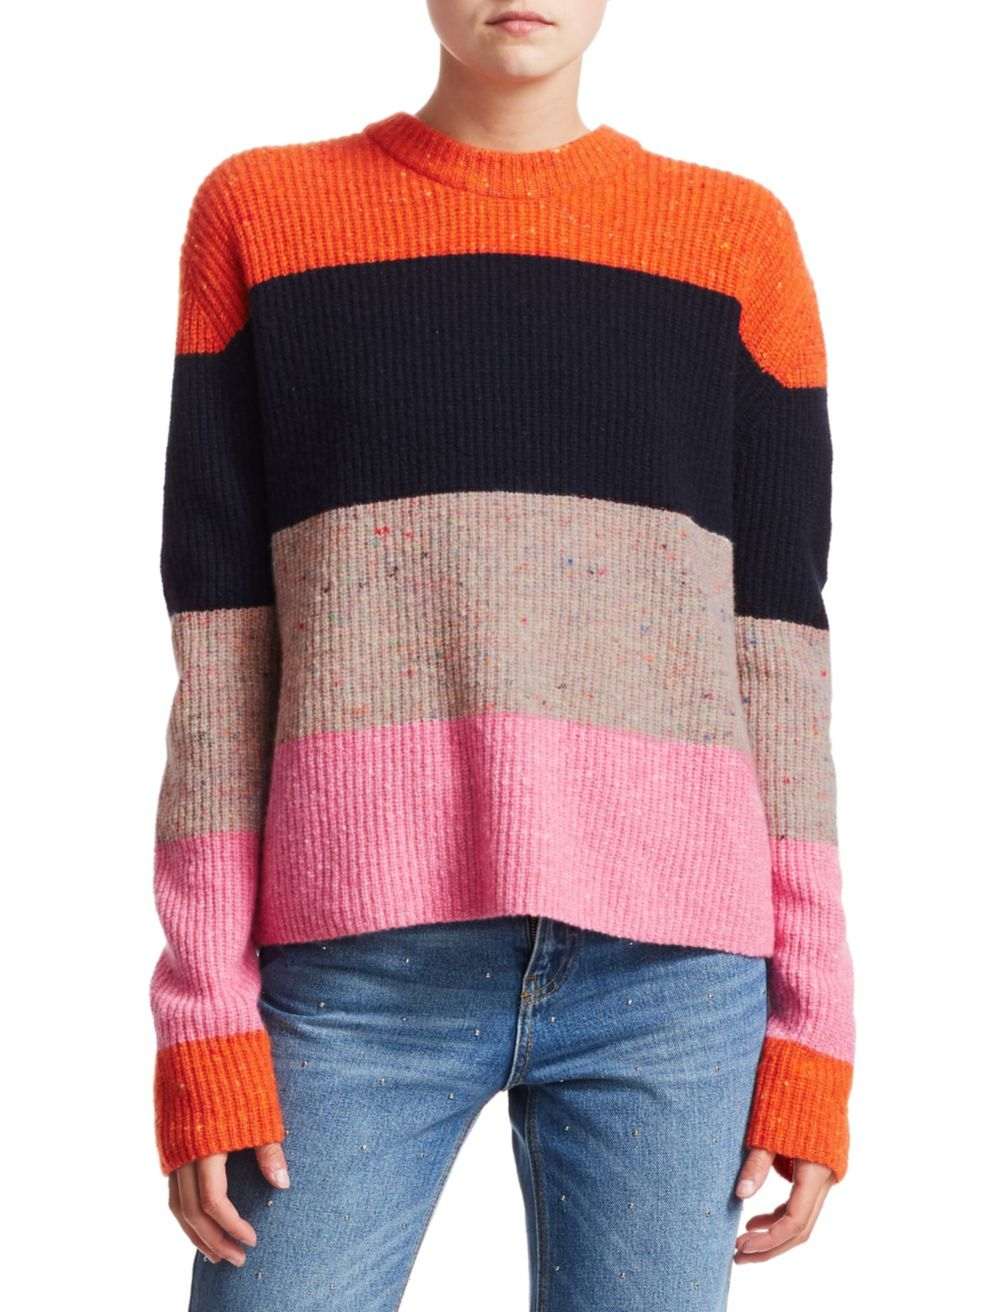 Georgina Bold Stripe Knit Sweater, $395